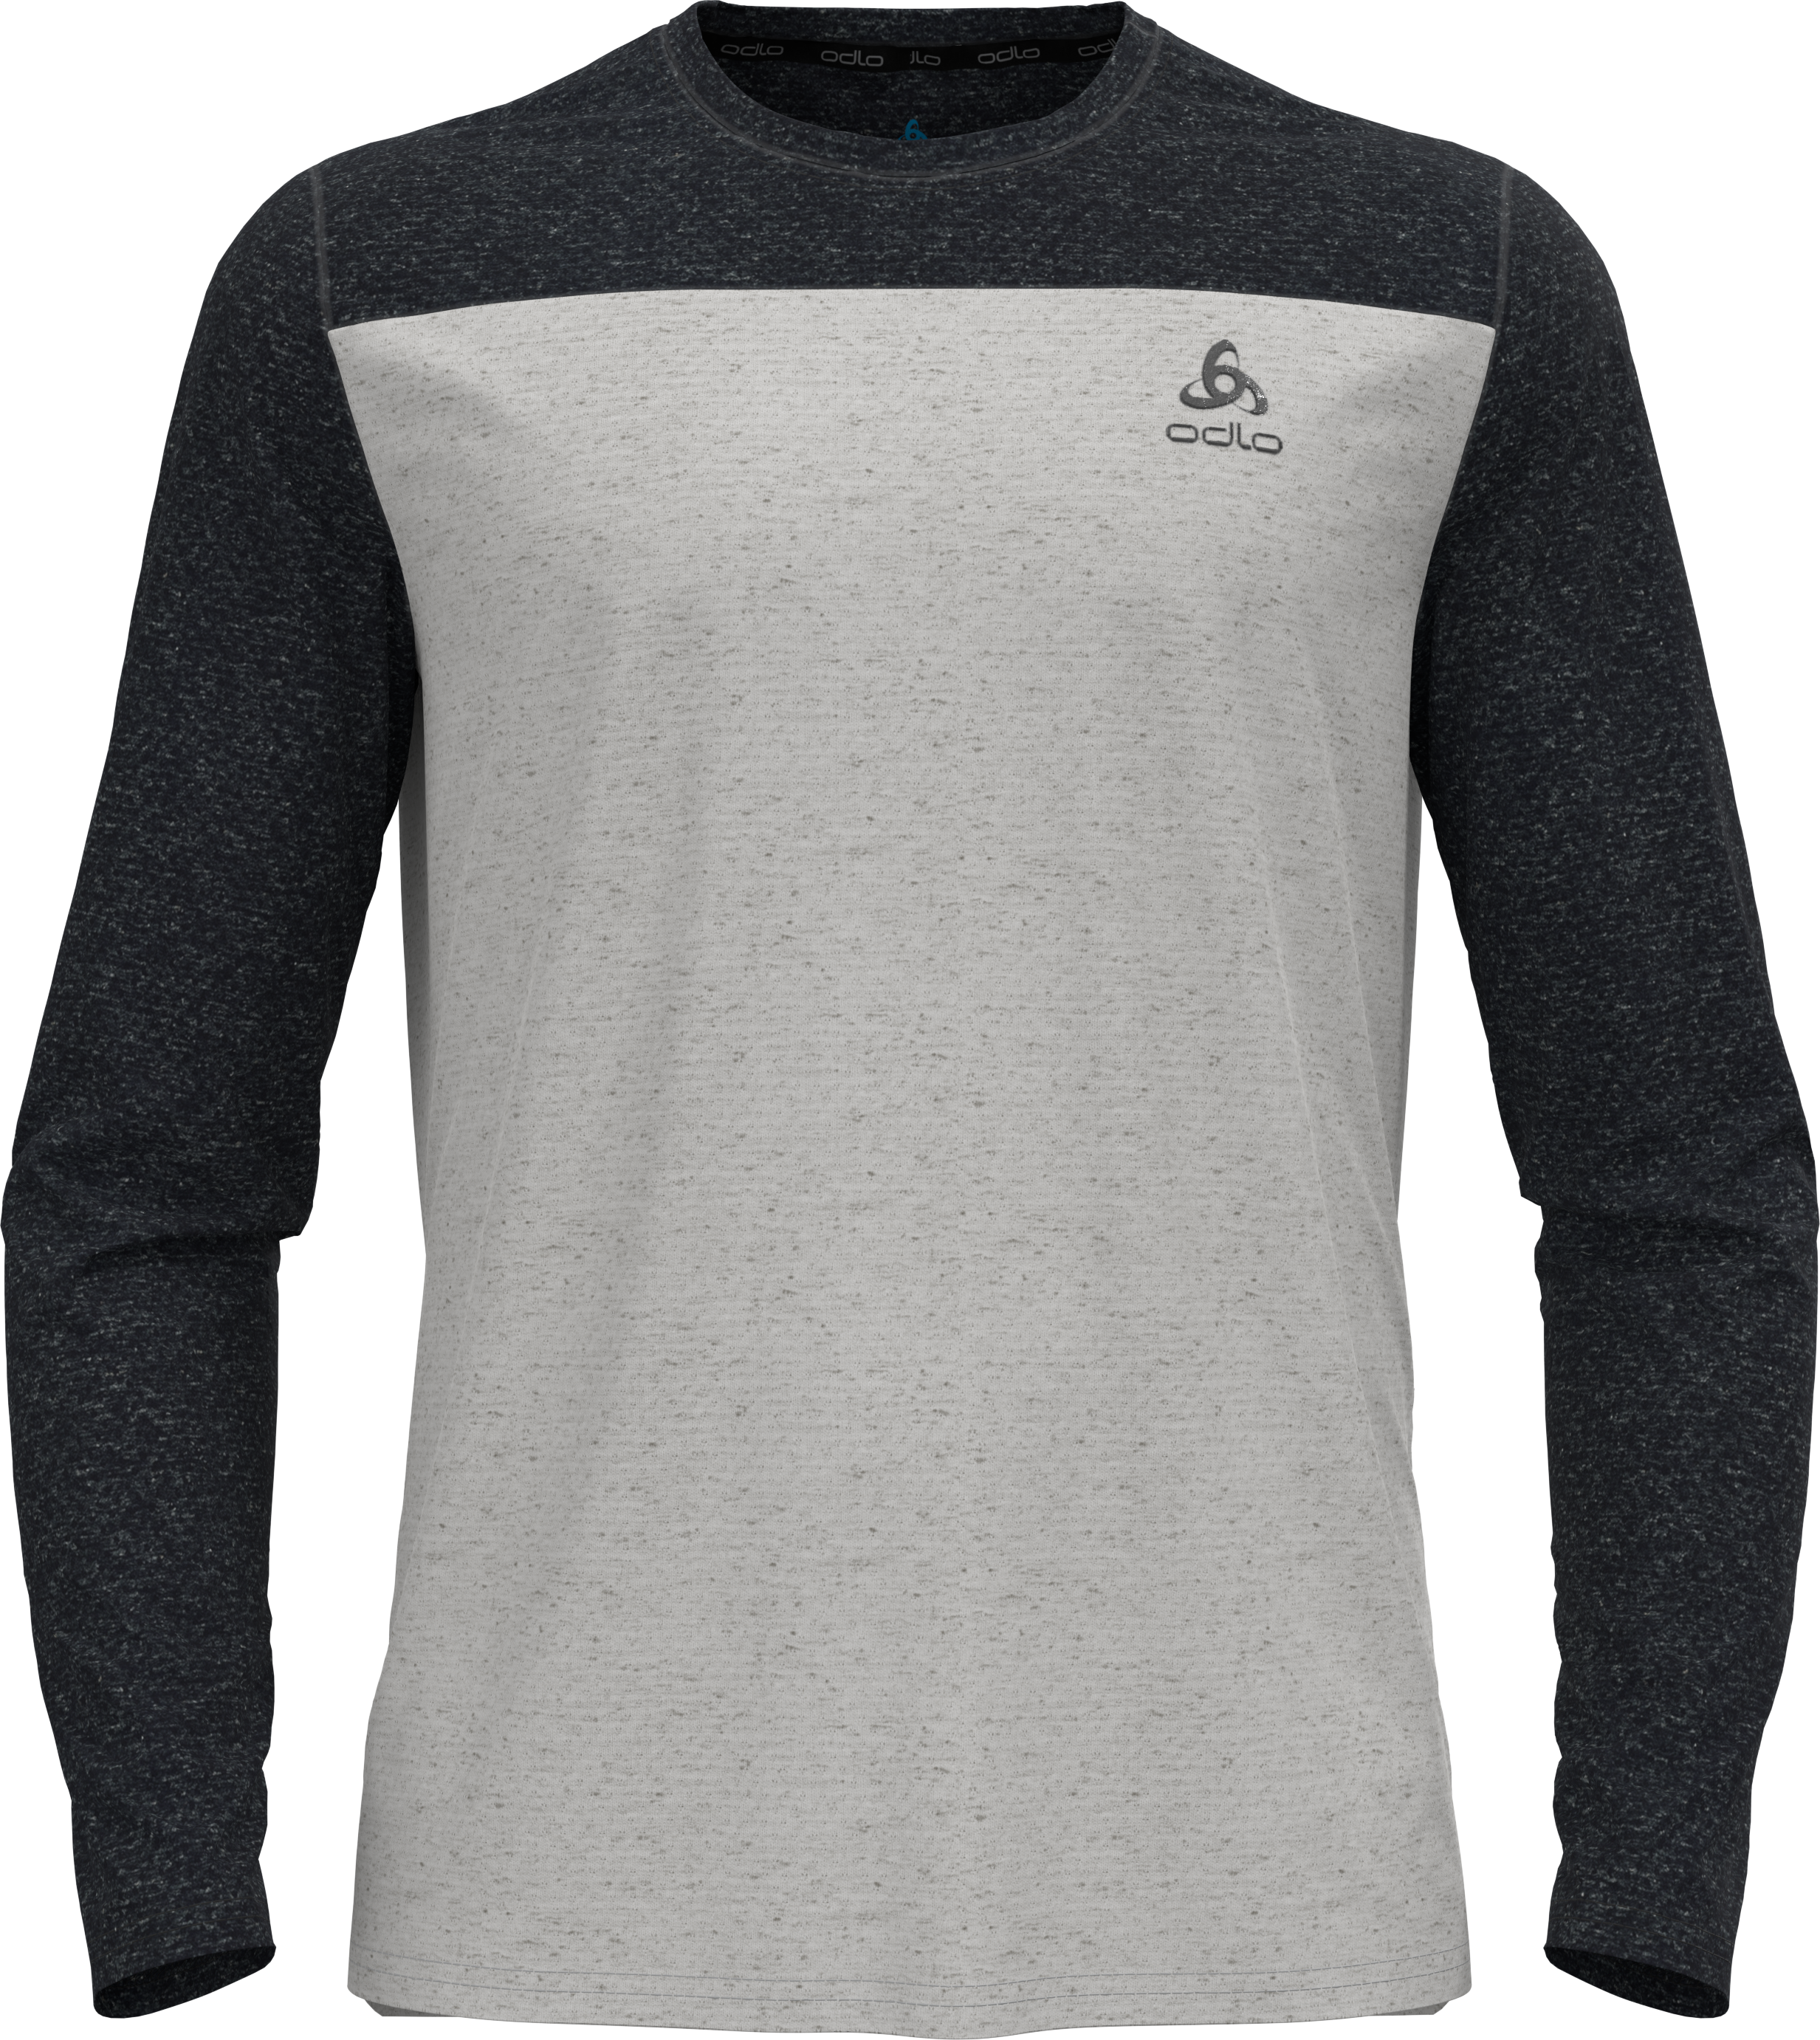 Odlo Men’s T-shirt Crew Neck L/S X-Alp Linencool Black – Odlo Concrete Grey